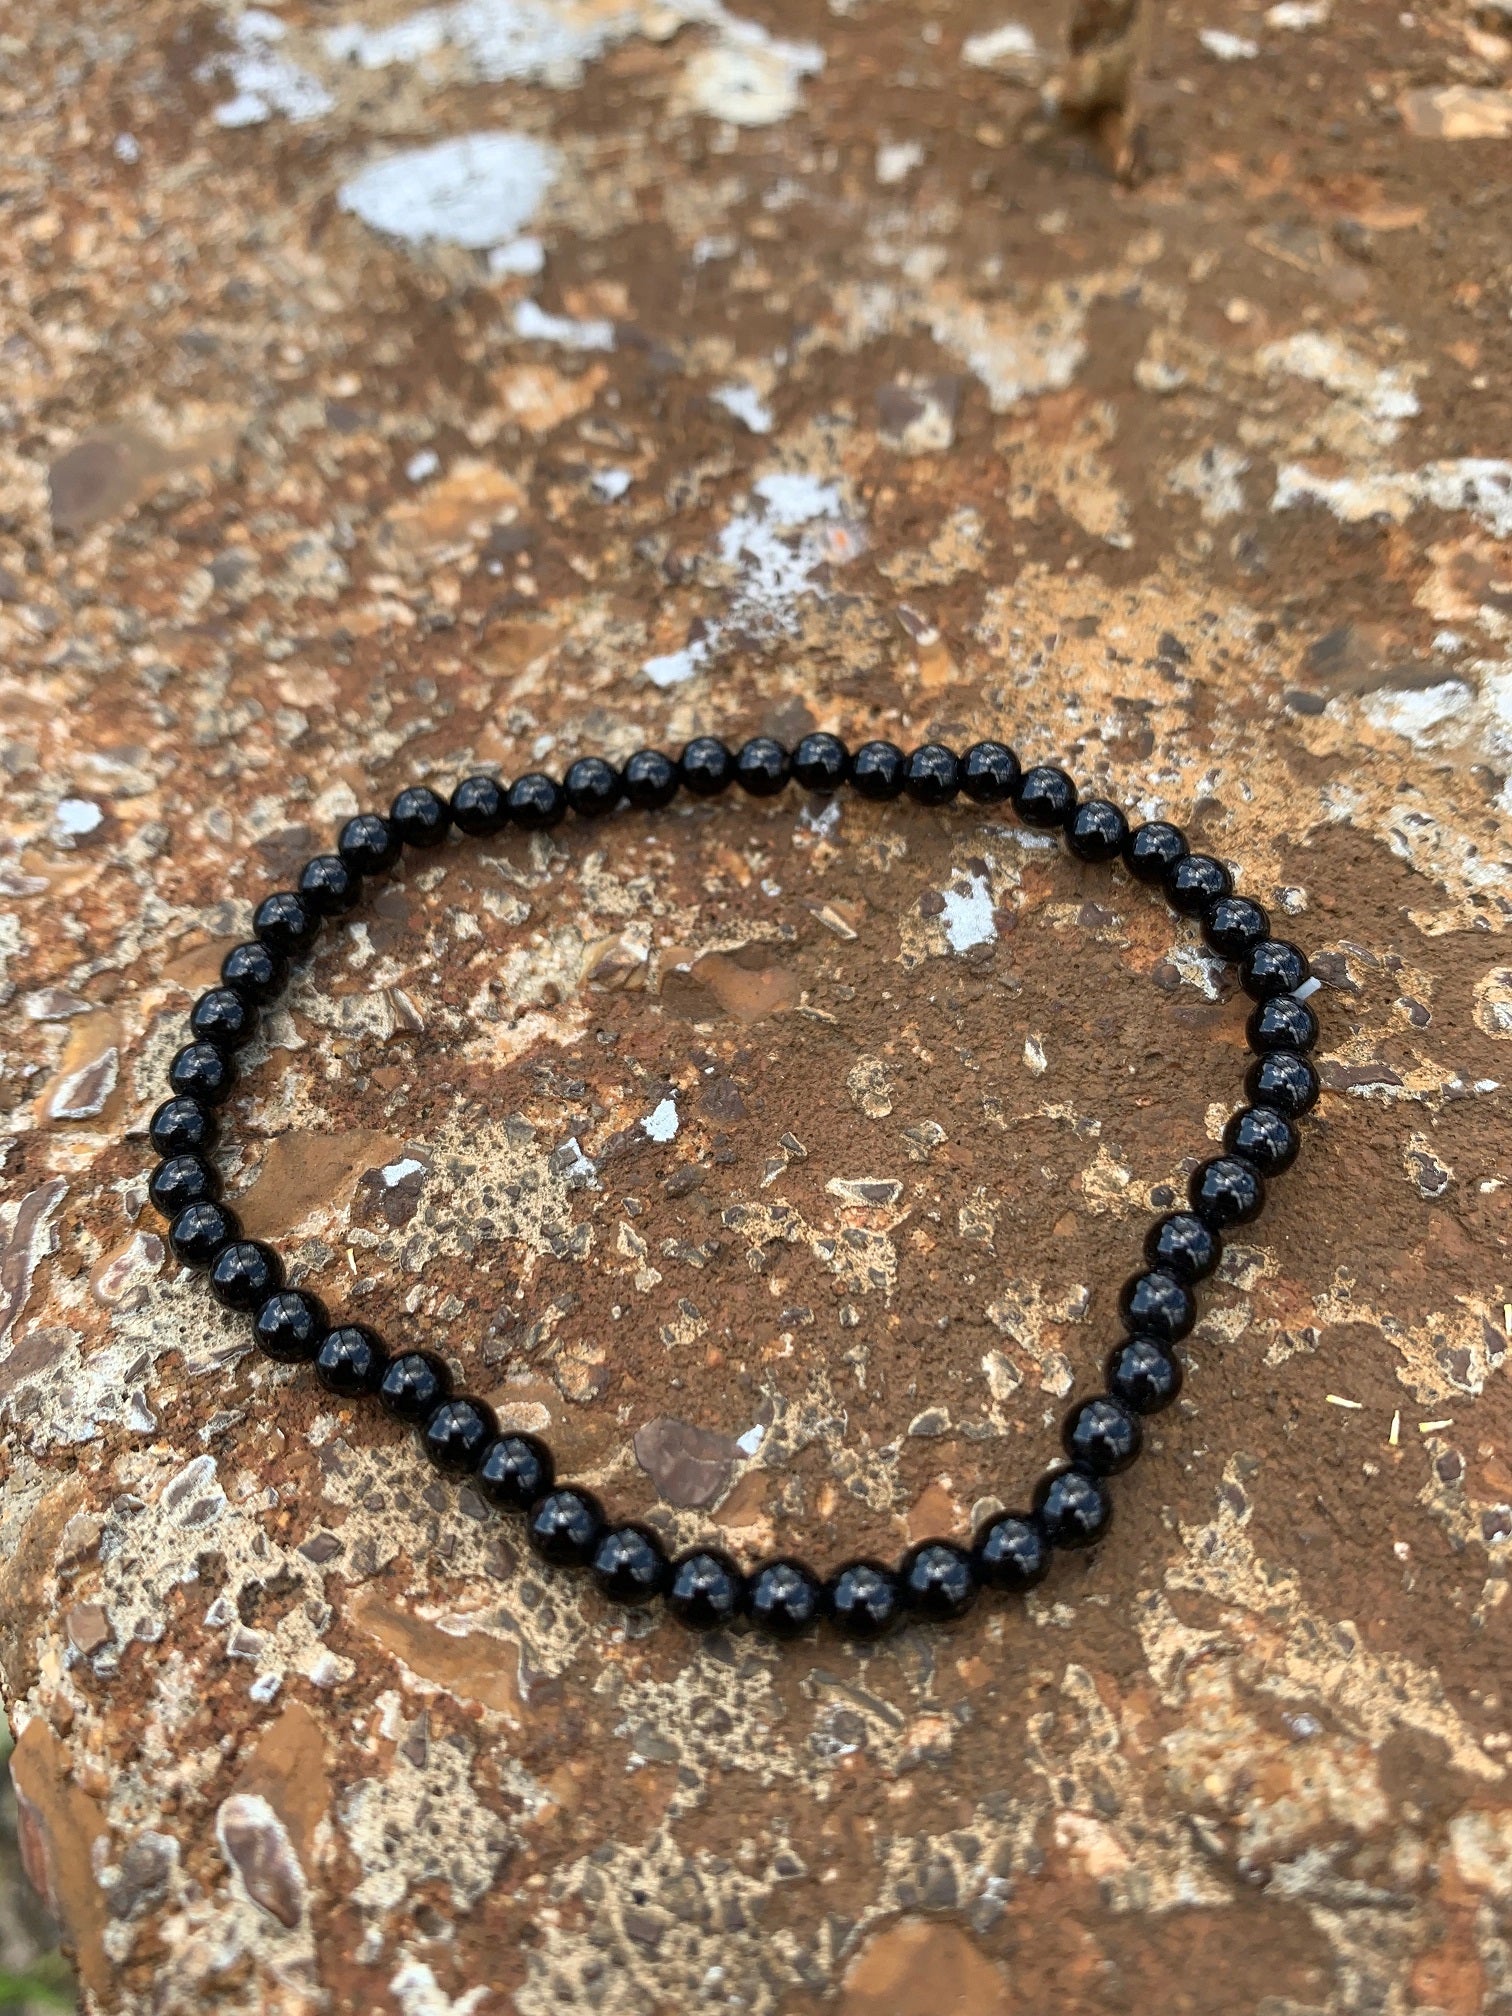 Buy MAUTIK SADIWALA Black Obsidian Bracelet, Natural Black Obsidian Bracelet  8mm Beads Size unisex Bracelet at Amazon.in